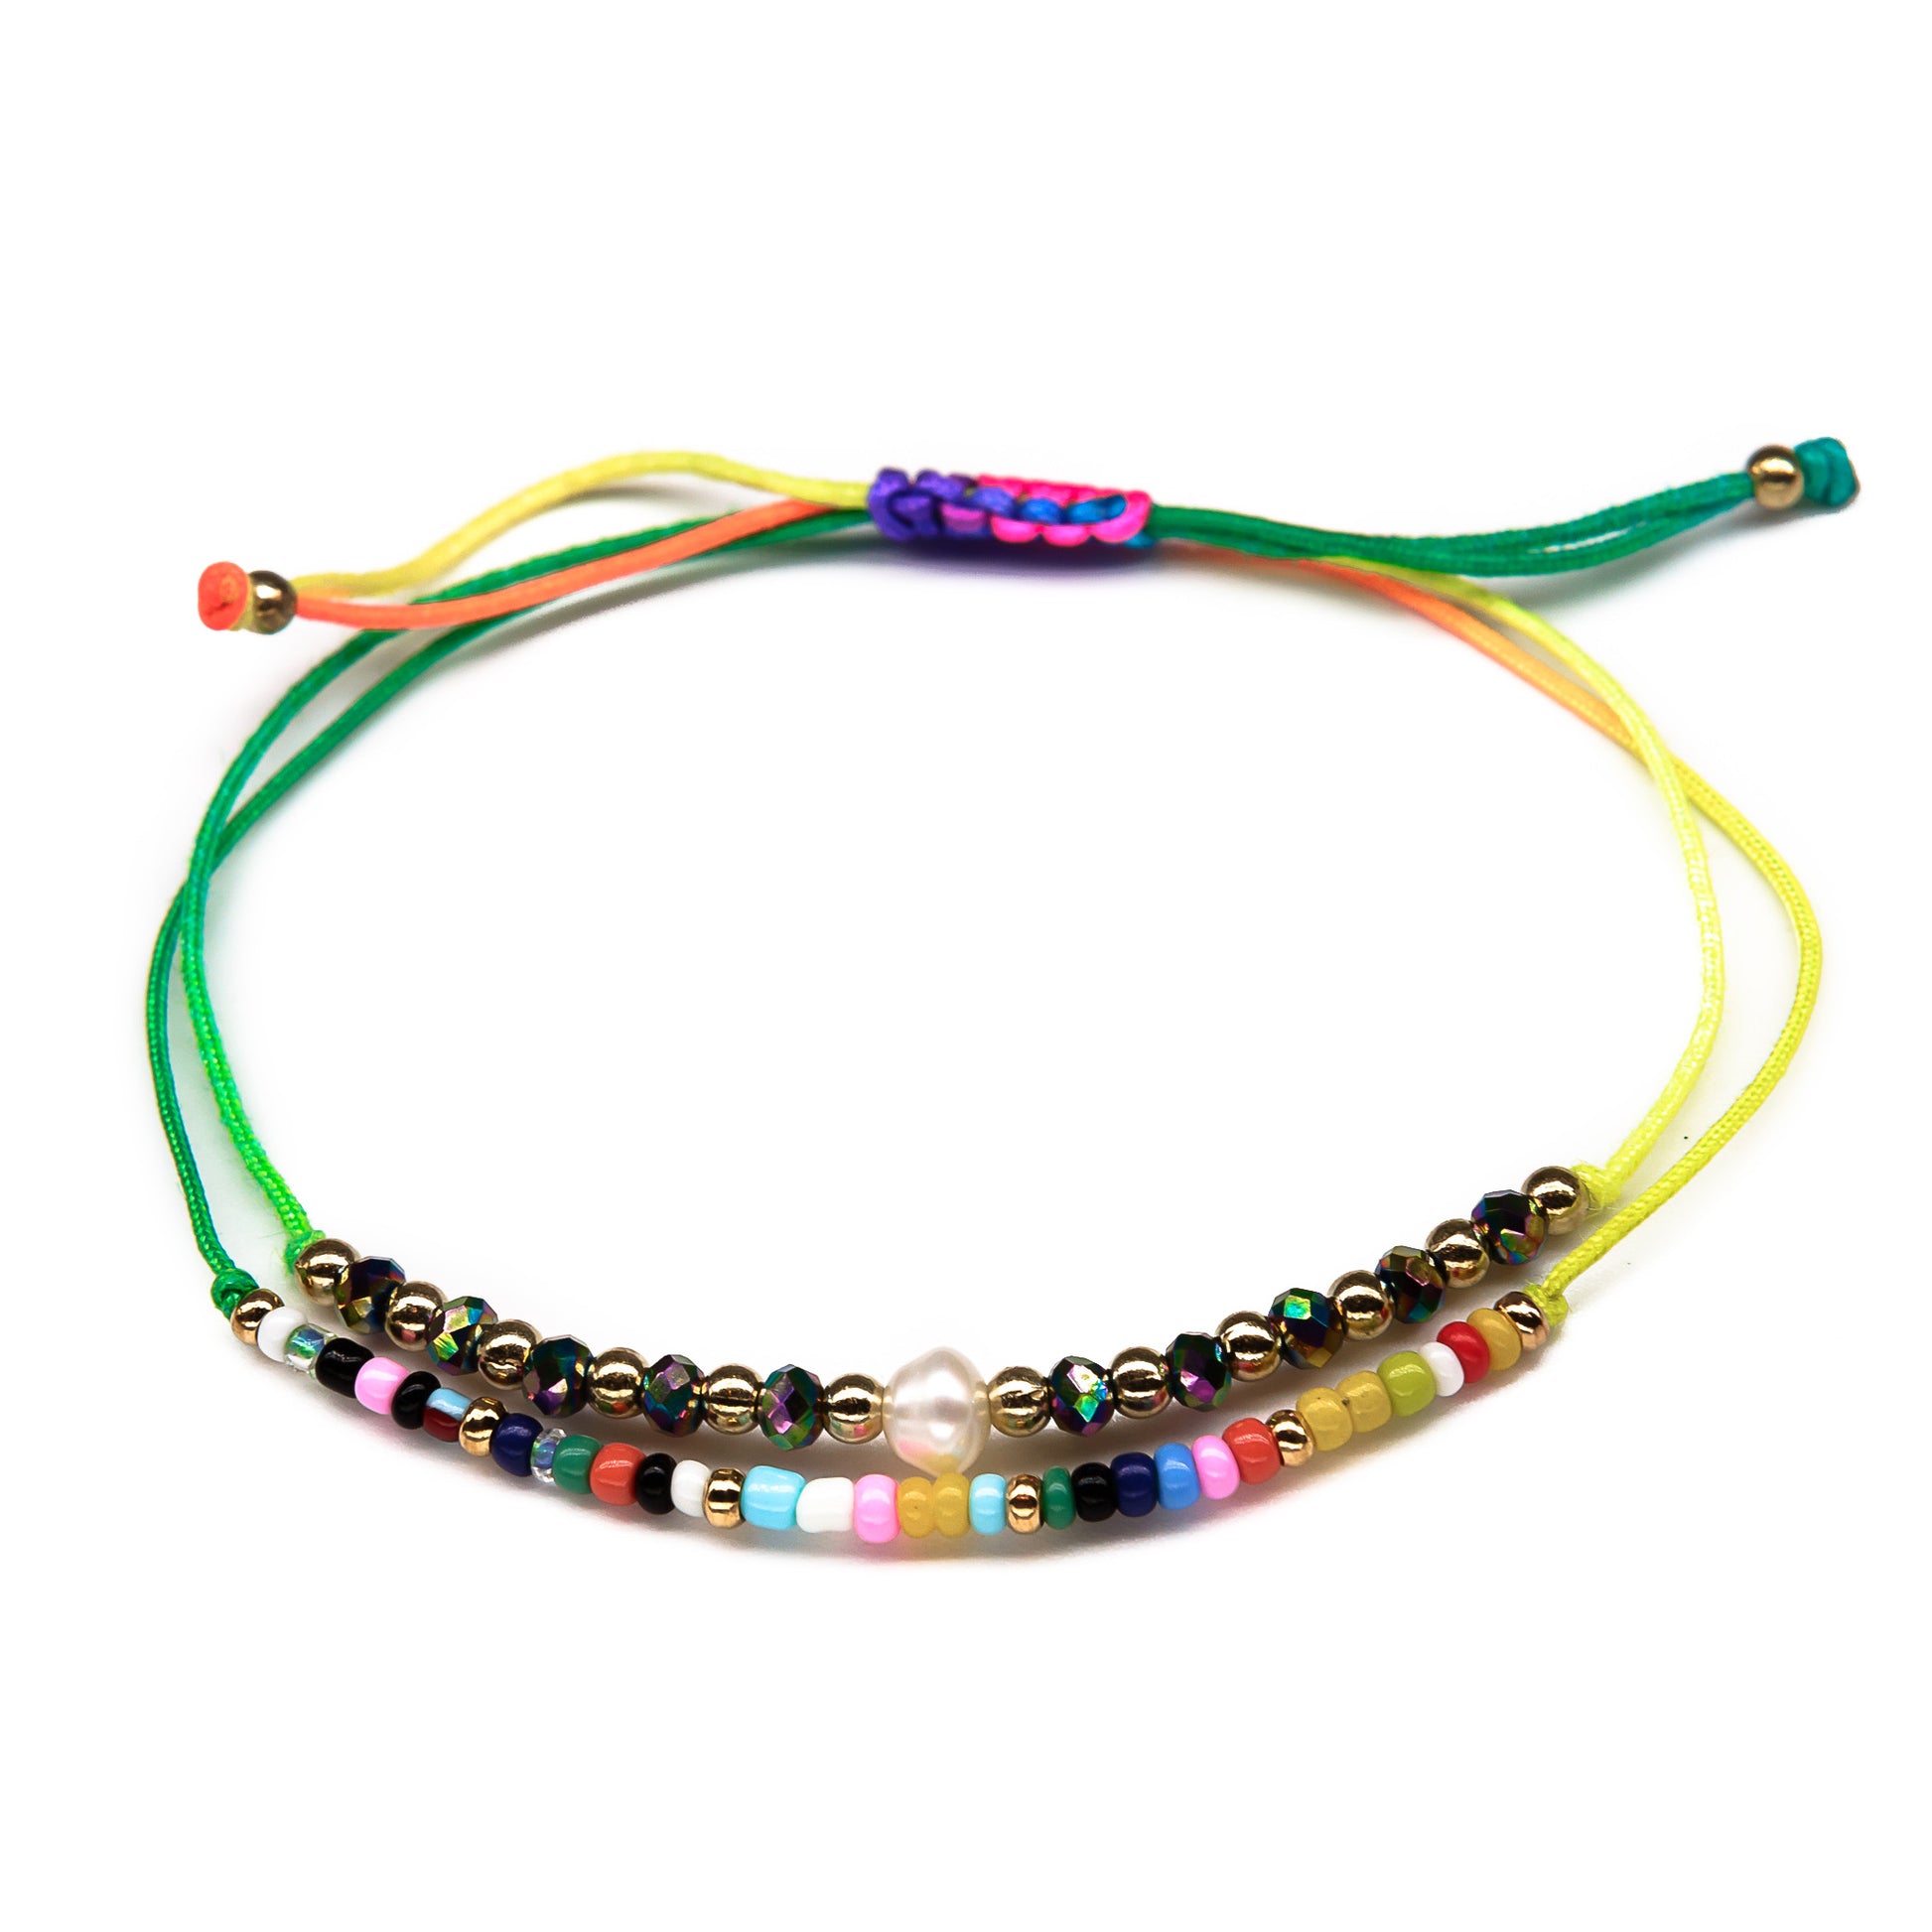 Black String Braided Rainbow Beads Bracelet